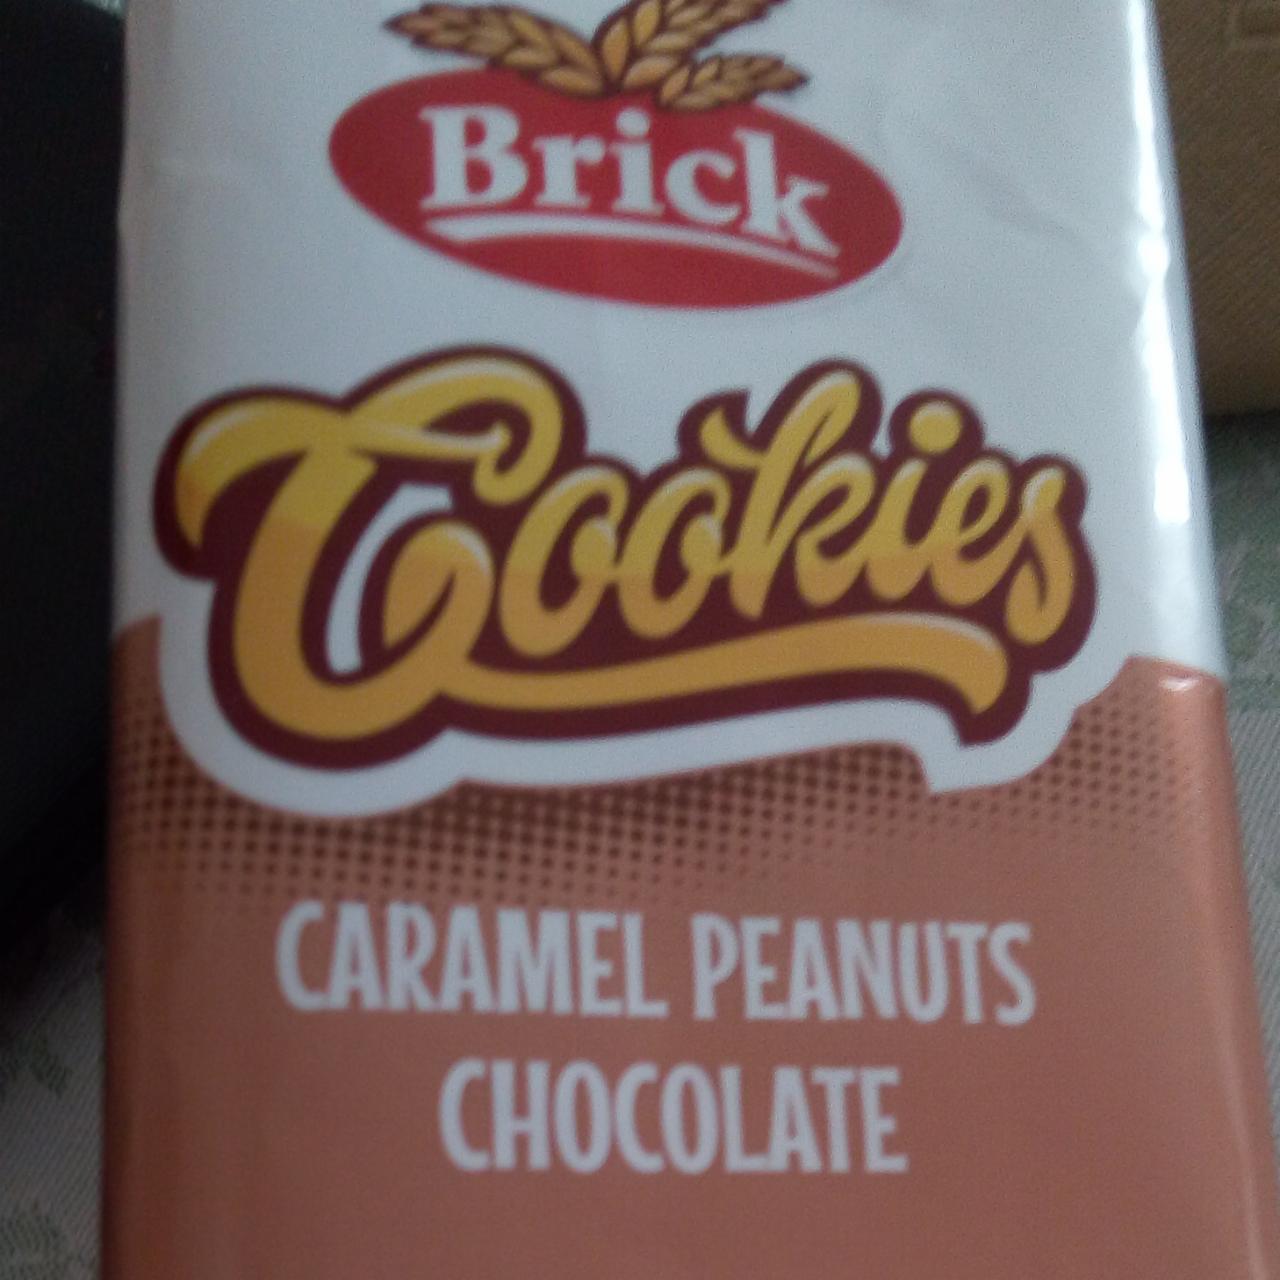 Fotografie - Cookies caramel peanuts chocolate Brick